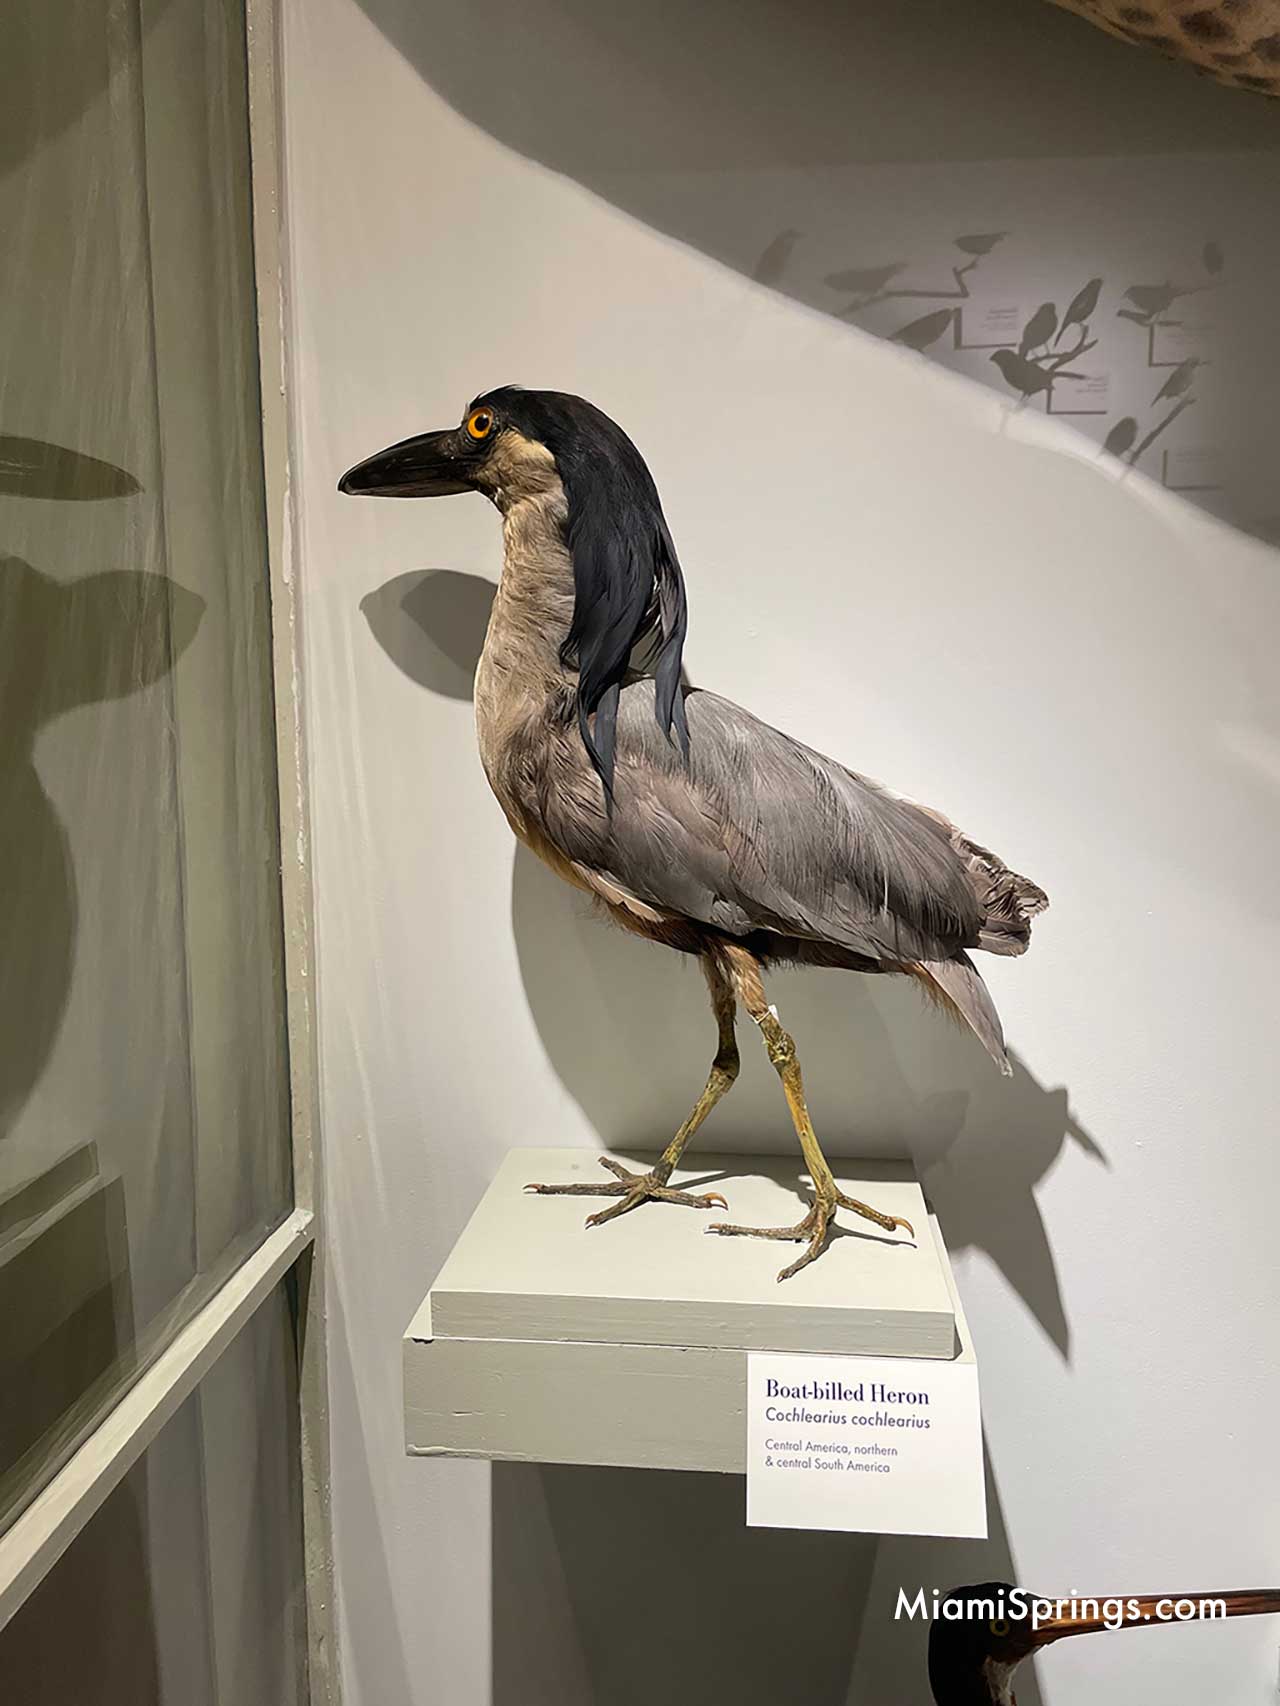 Boat-billed Heron displayed at the Harvard Museum of Natural History